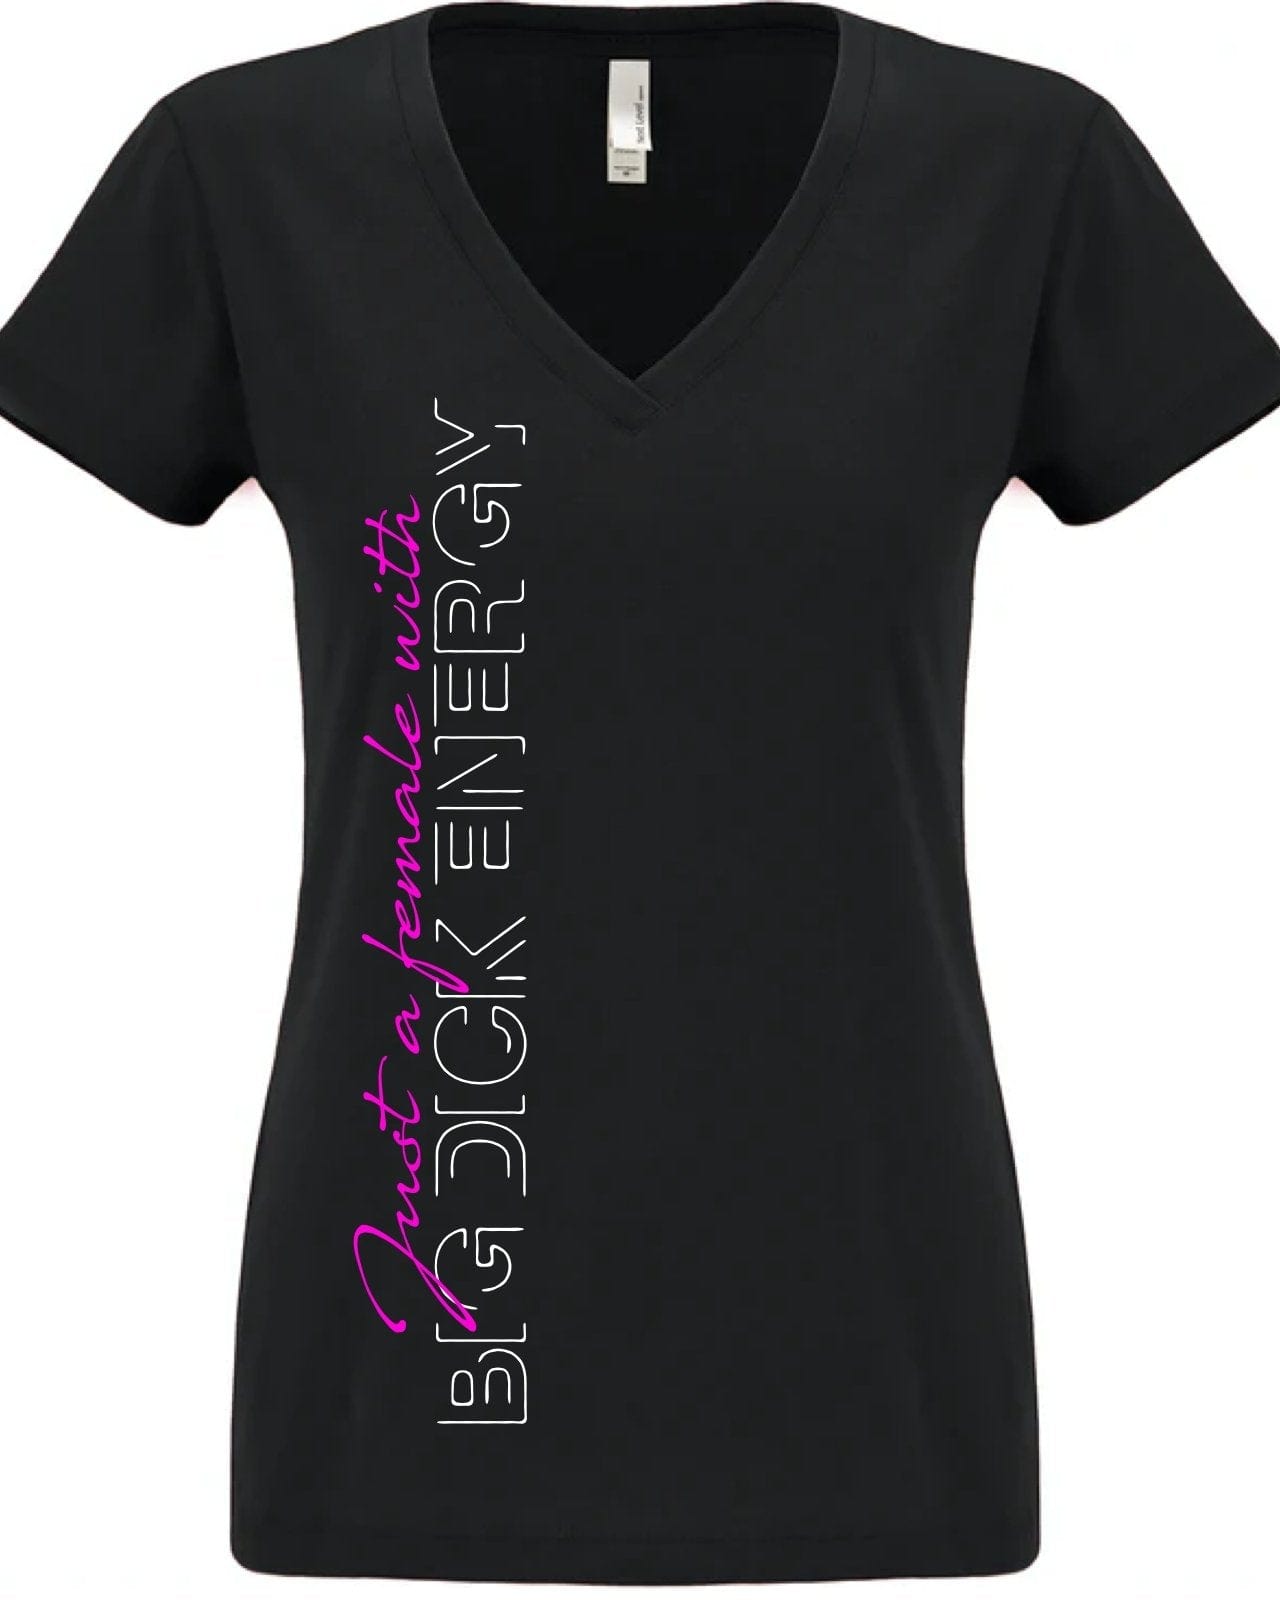 InsensitiviTees Shirts Ladies S / Black Big D!ck Energy